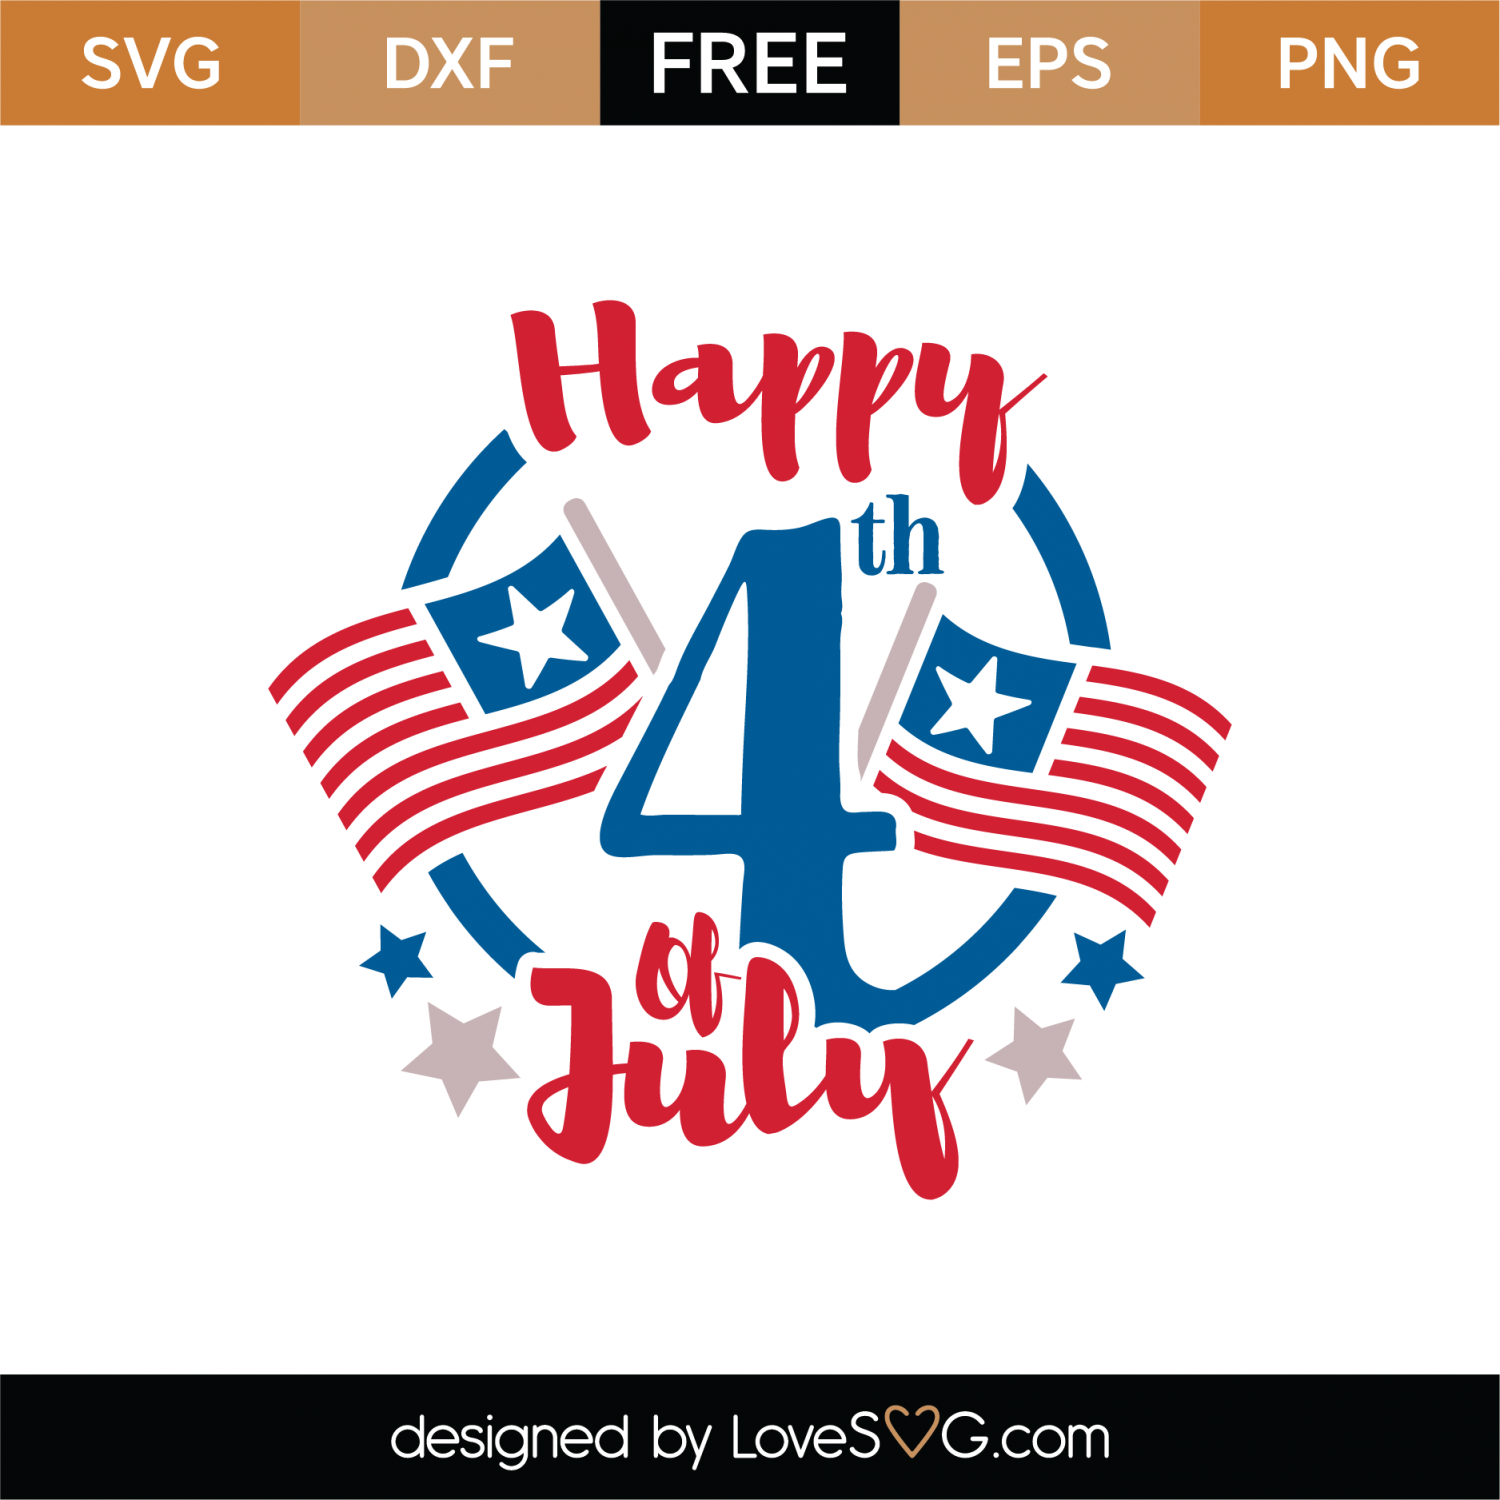 Happy 4th of July SVG Cut File by Lovesvg.com